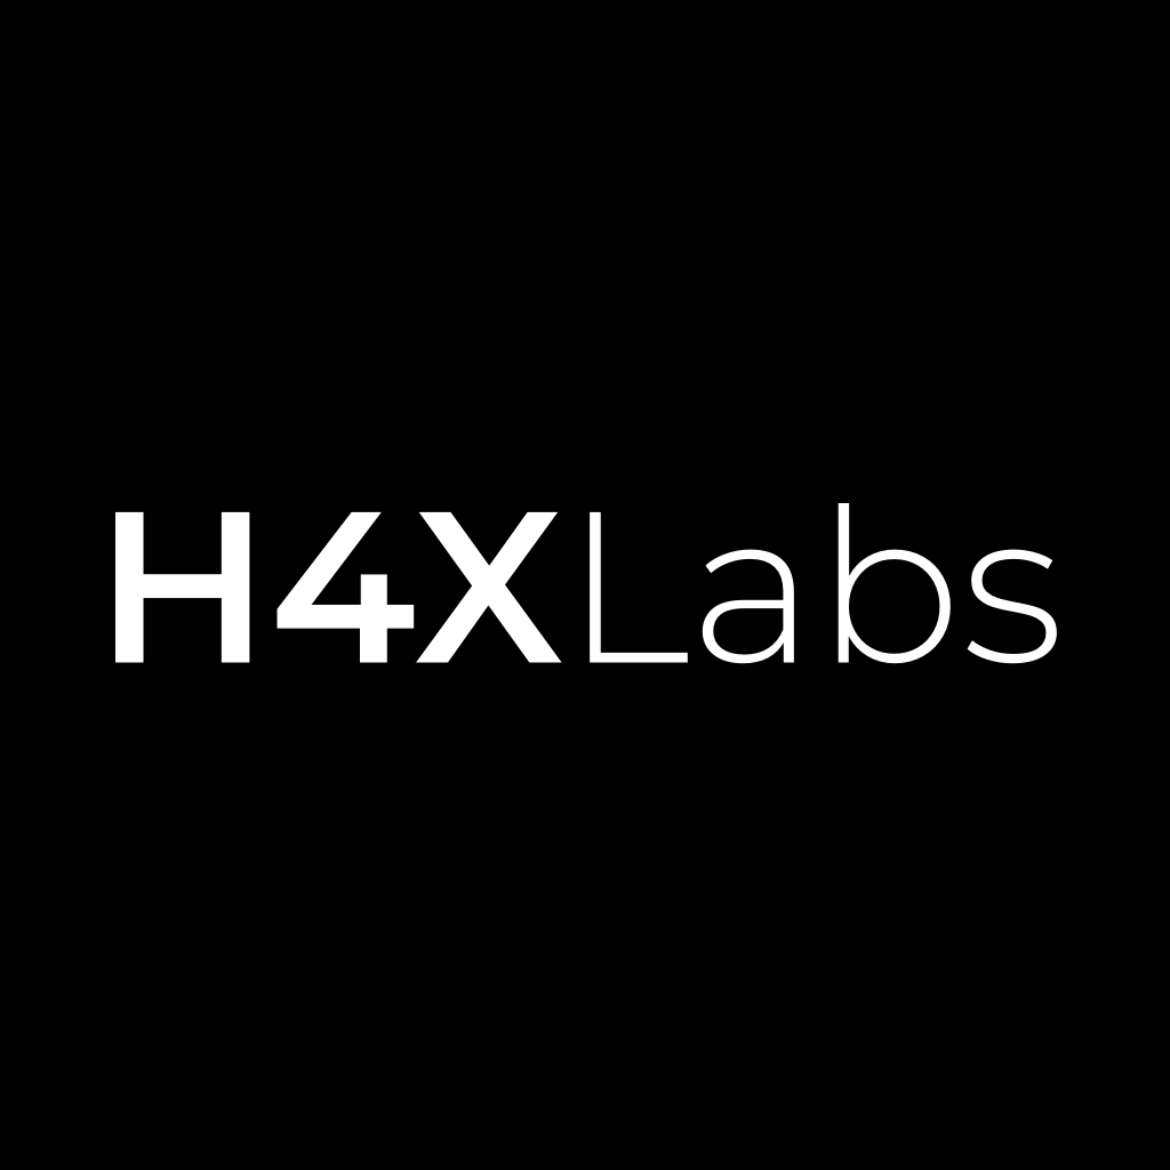 H4X - Crunchbase Company Profile & Funding